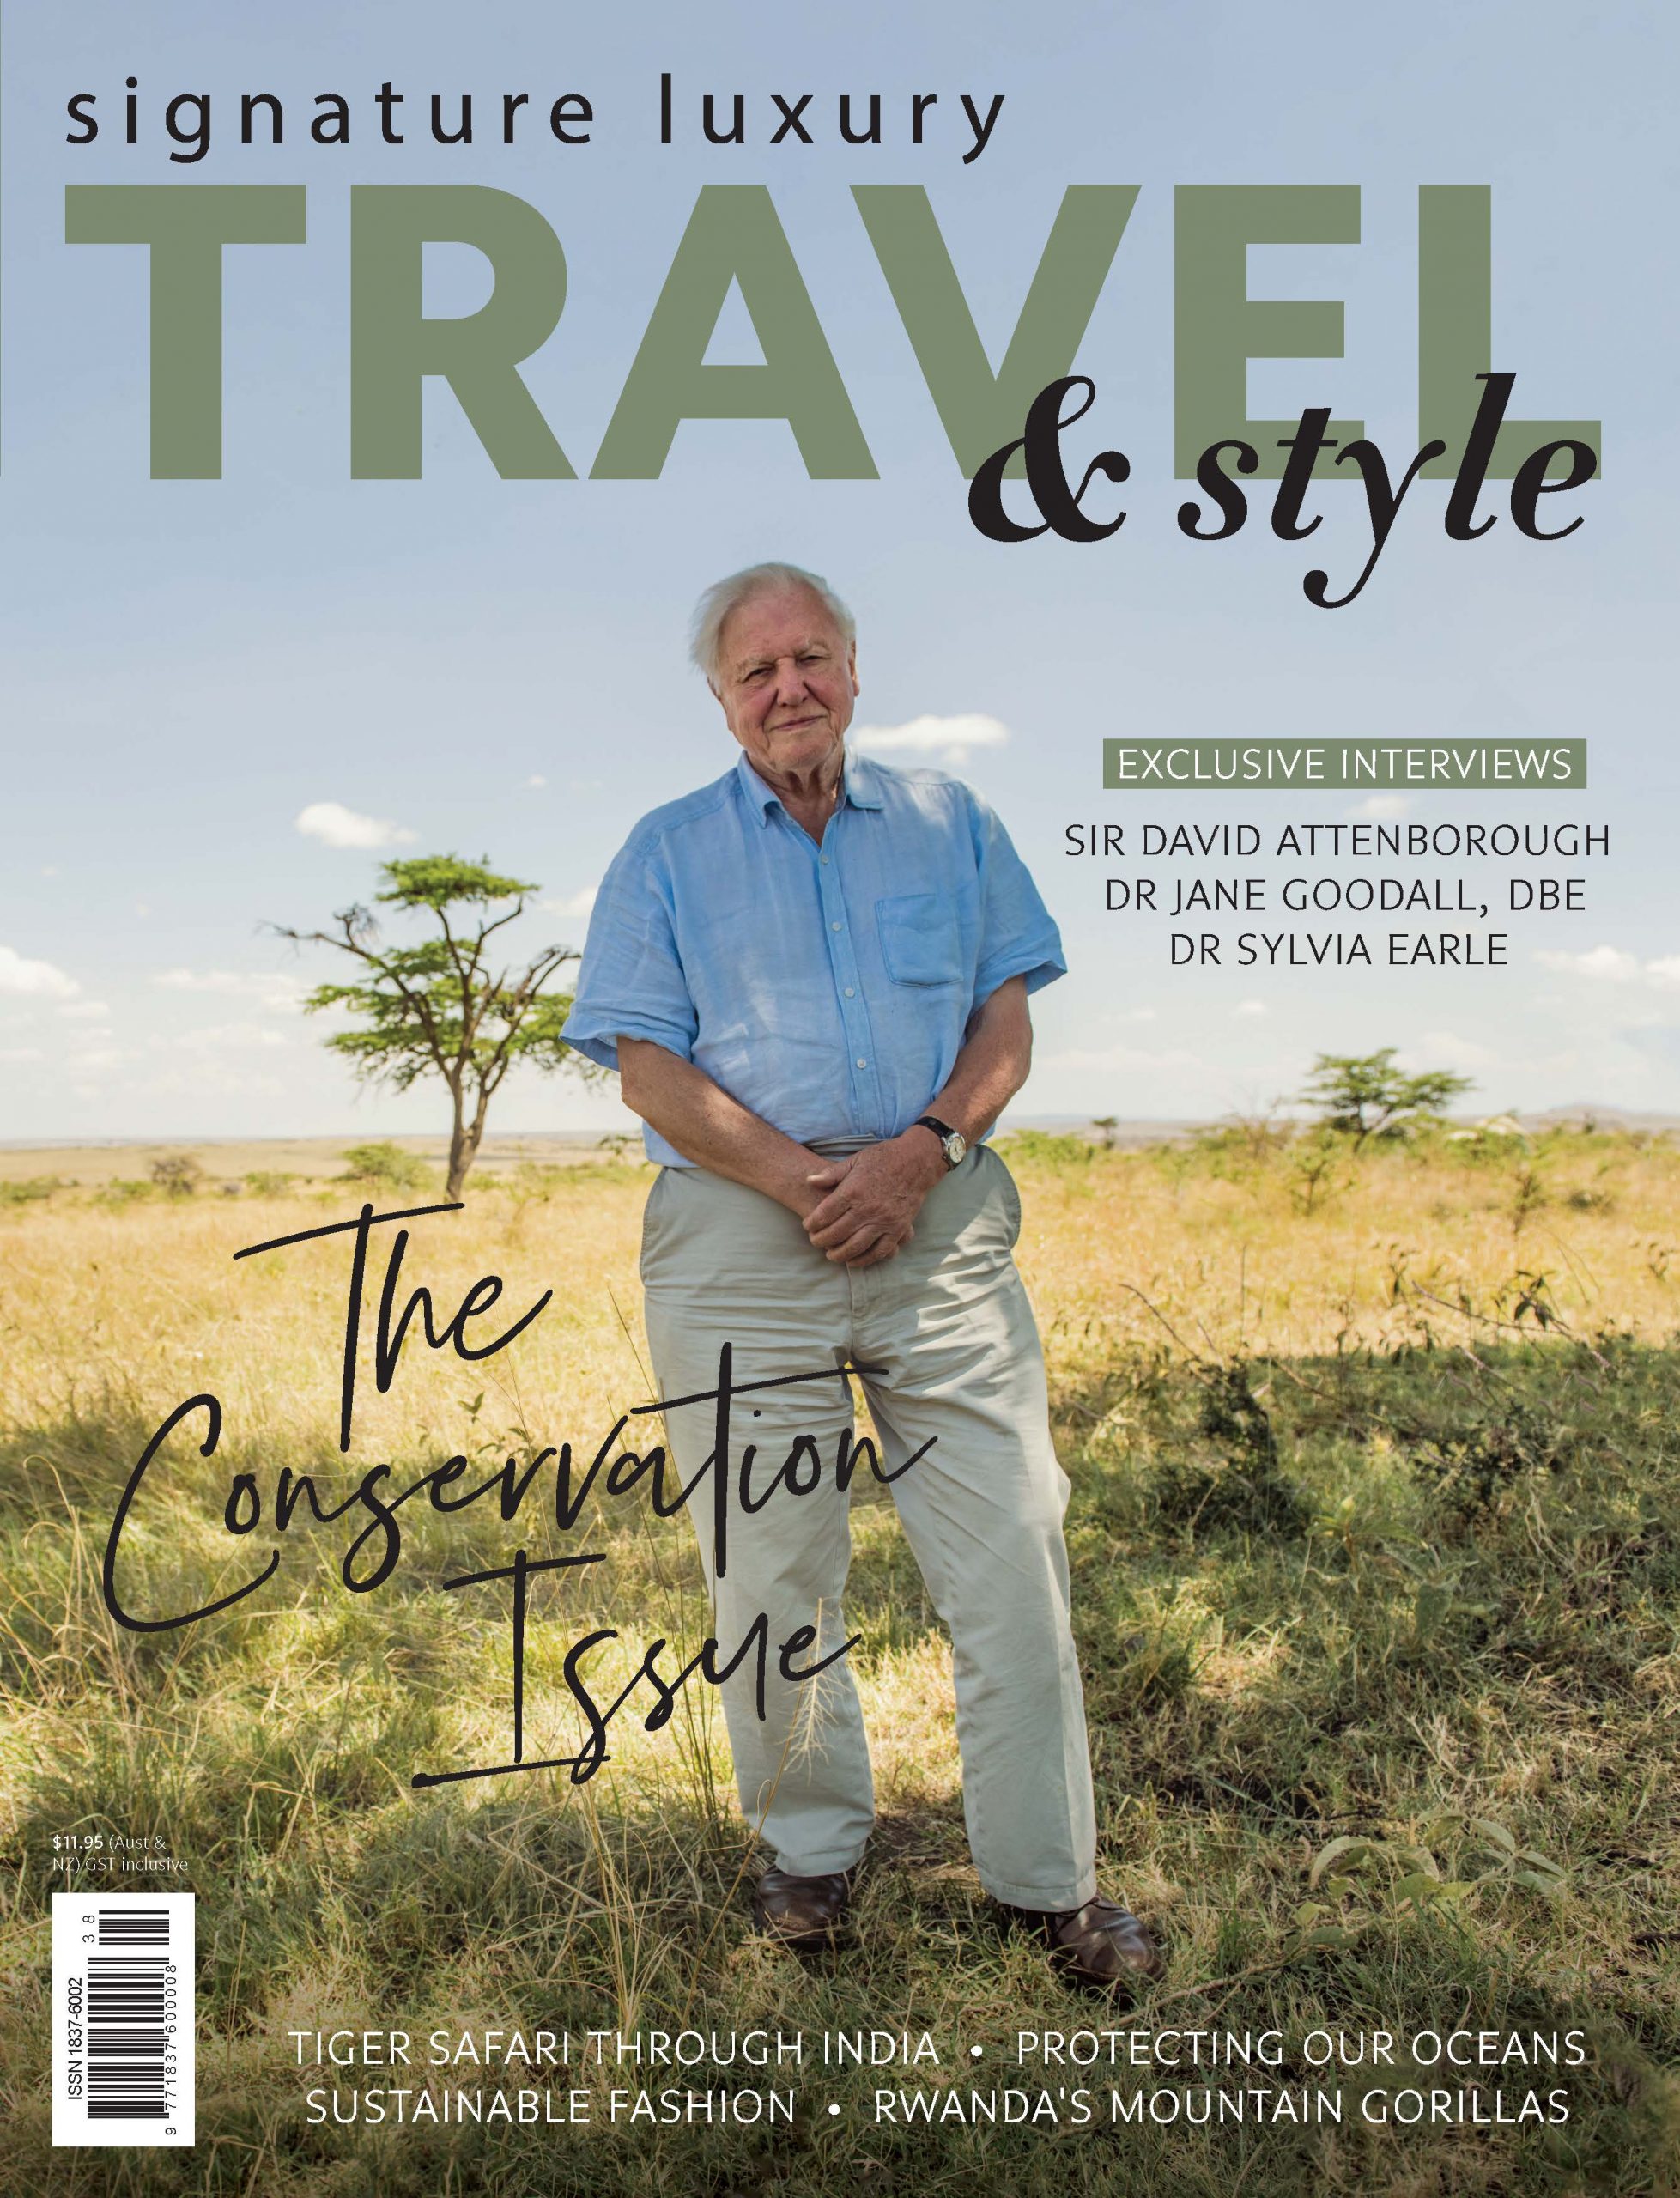 Signature luxury travel and style magazine cover